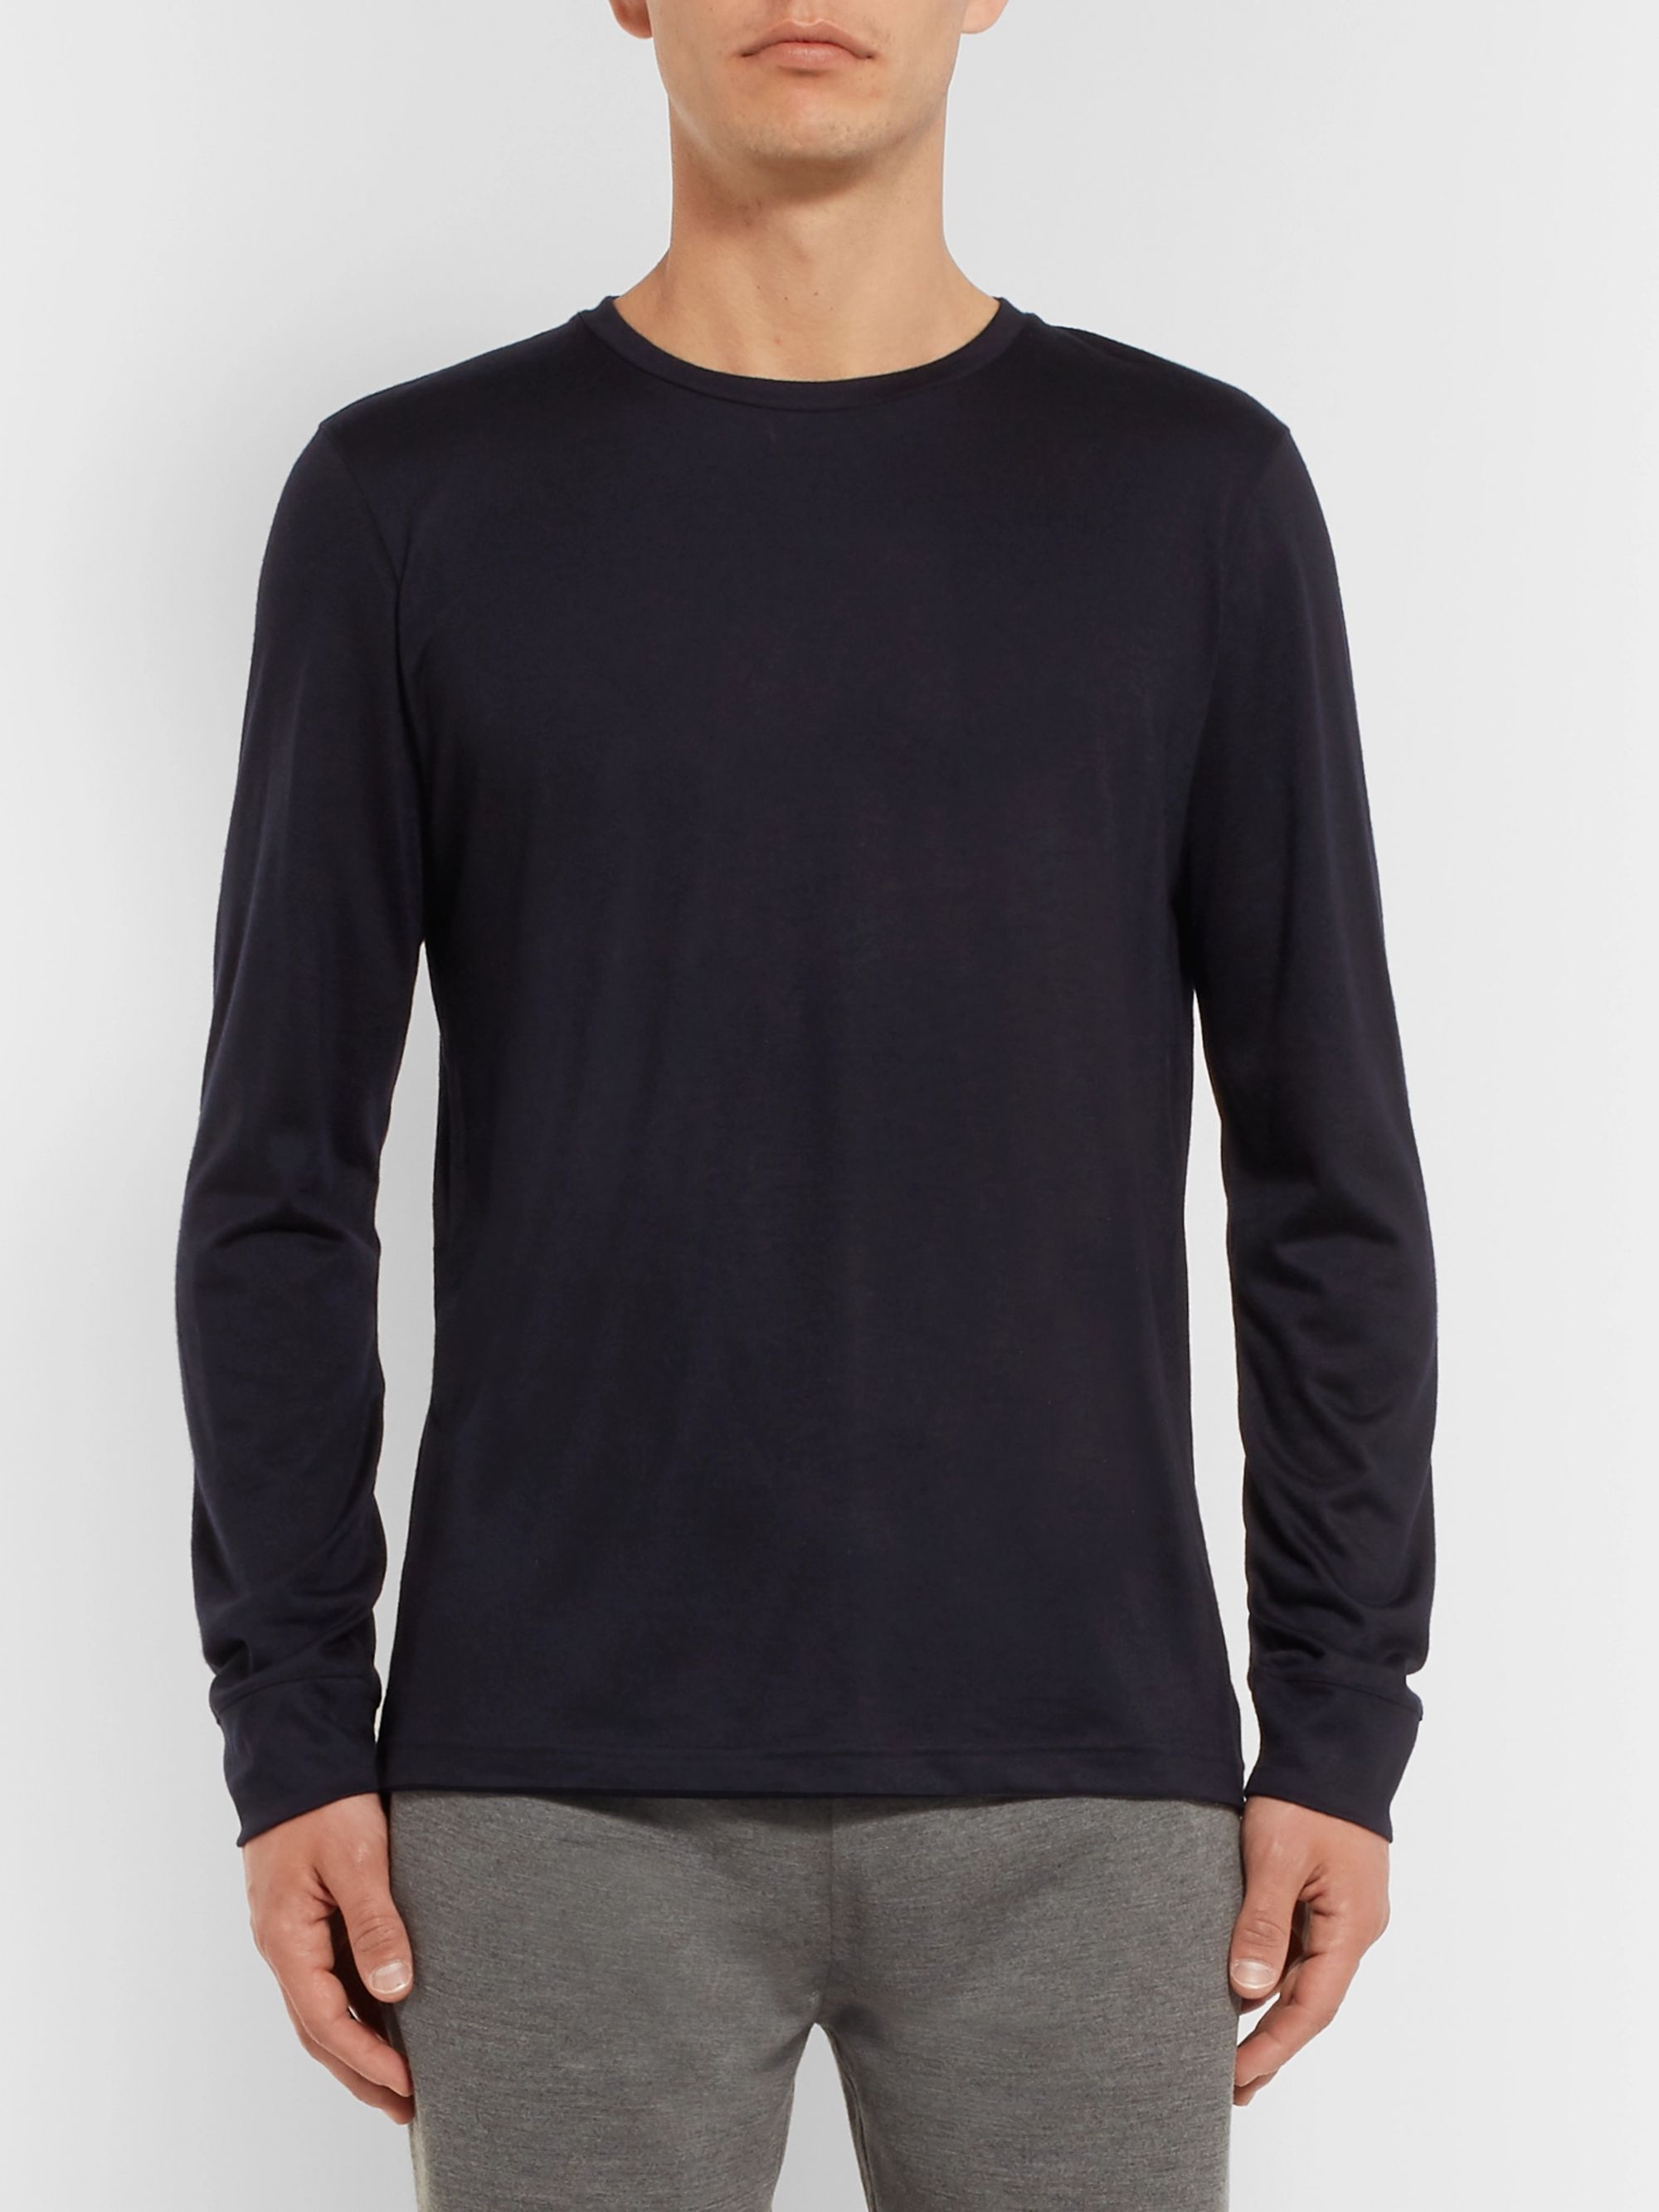 Navy Slim-Fit Cashmere-Jersey T-Shirt | LORO PIANA | MR PORTER